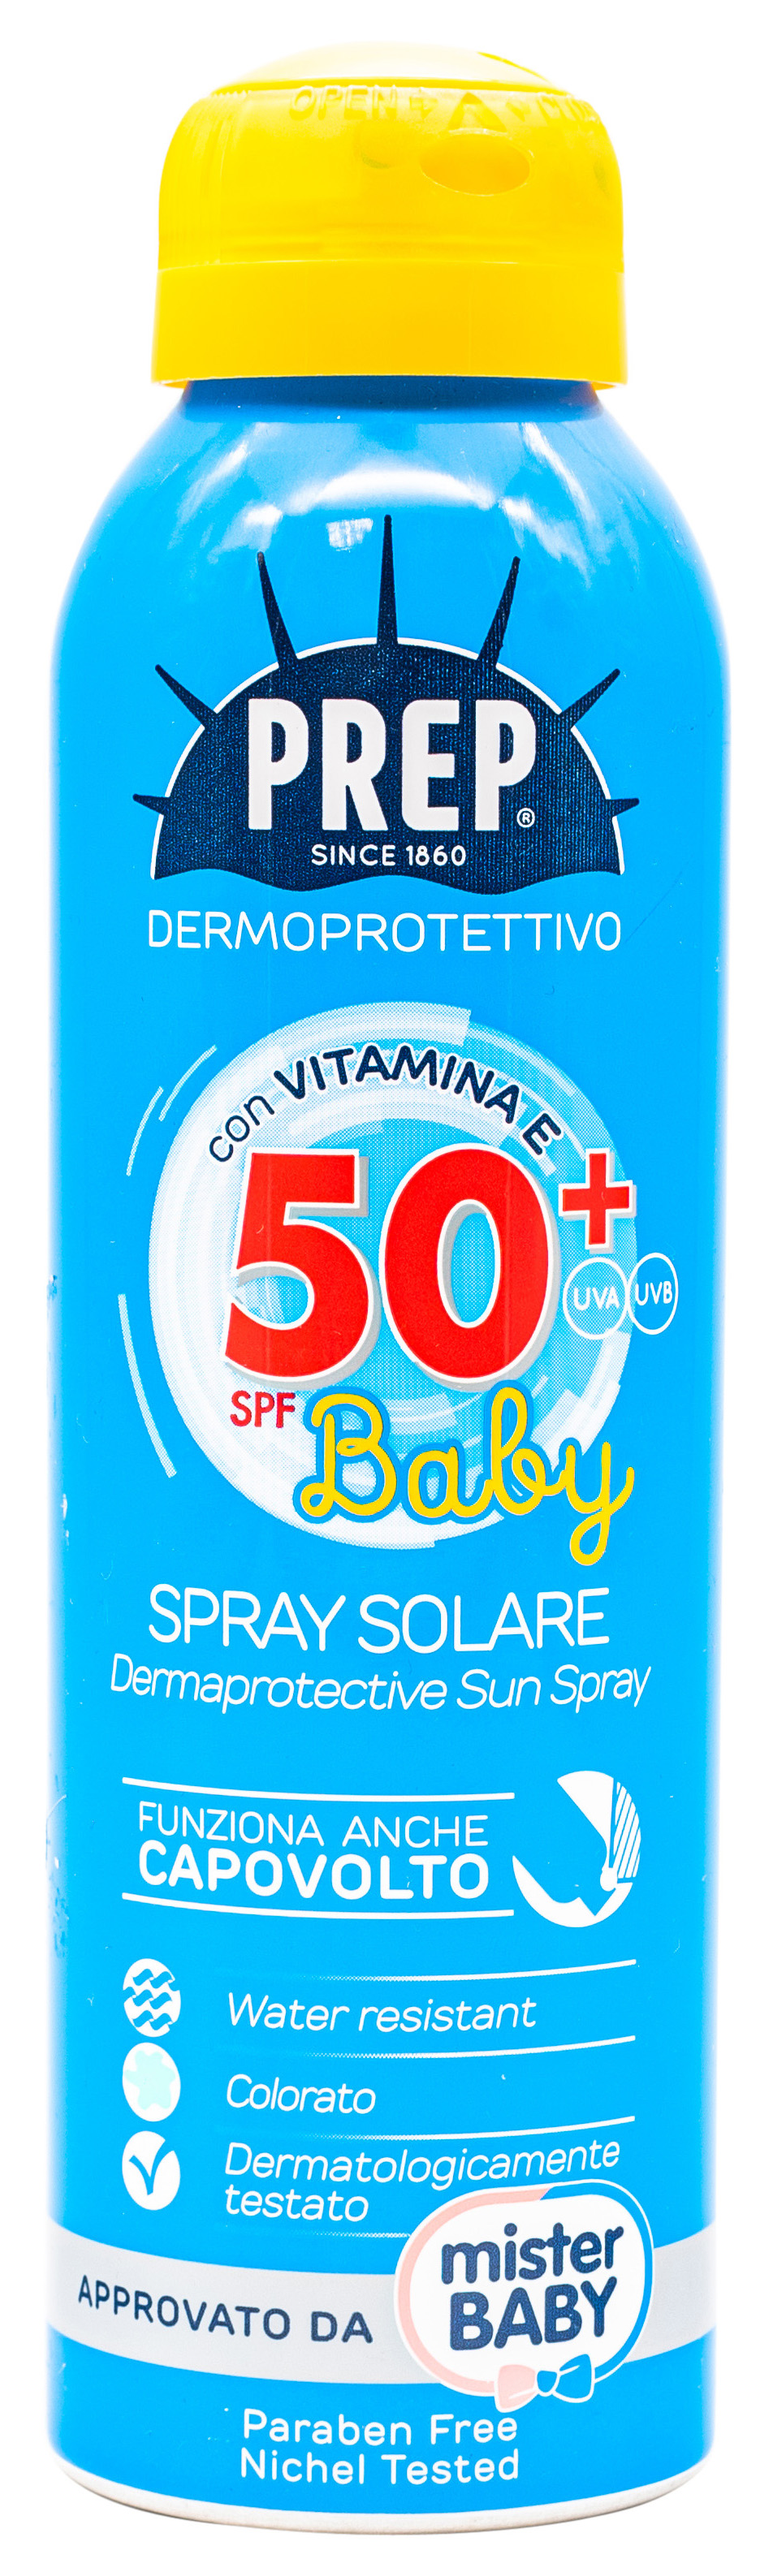 BABY SPRAY SOLARE DERMOPROTETTIVO 50+